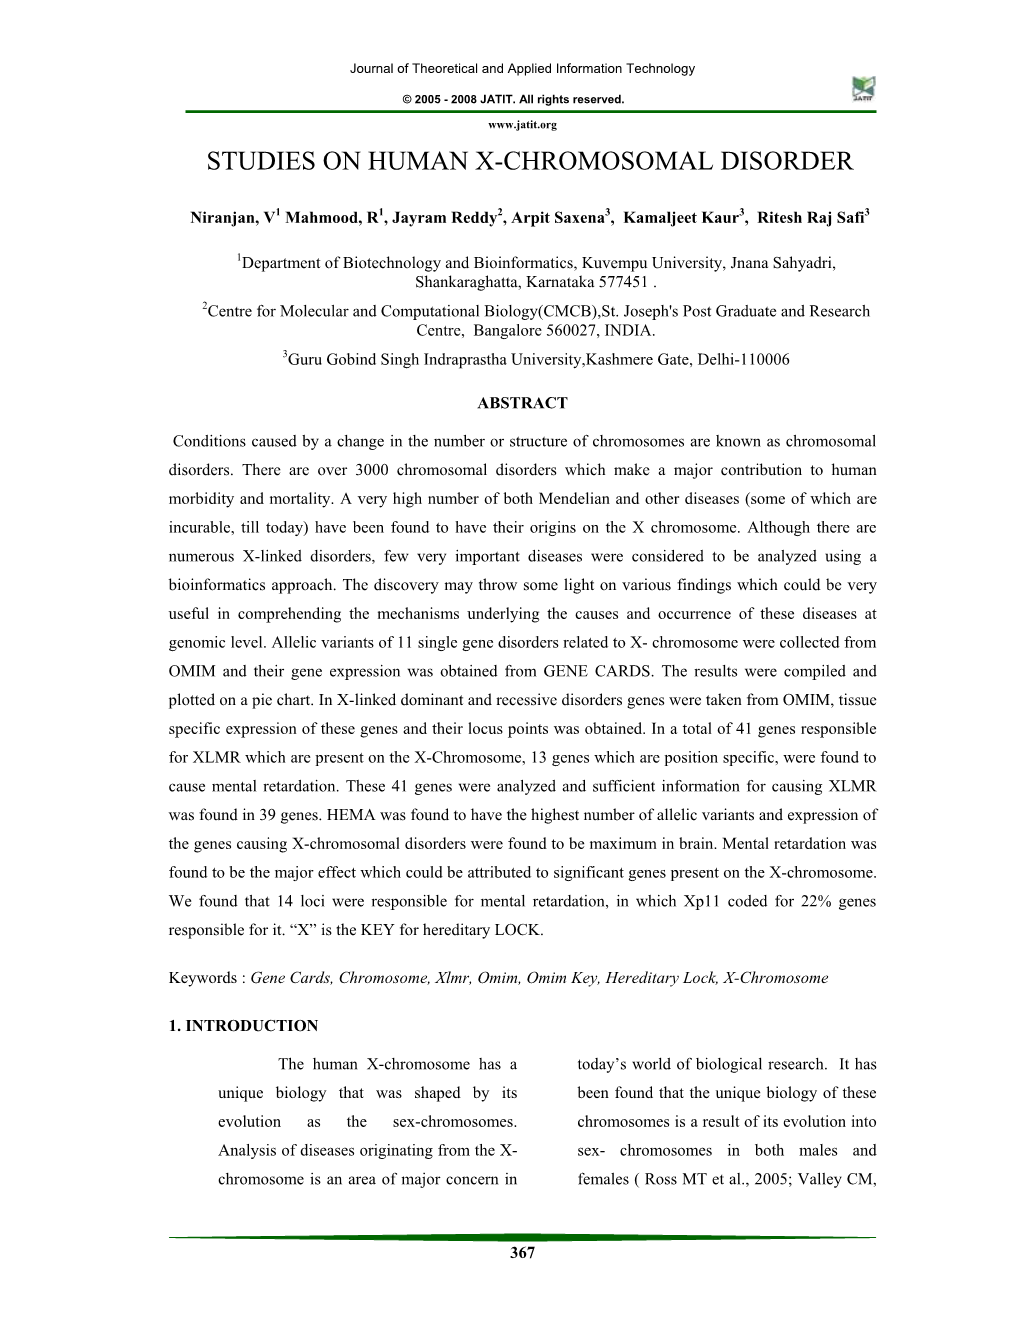 Studies on Human X-Chromosomal Disorder